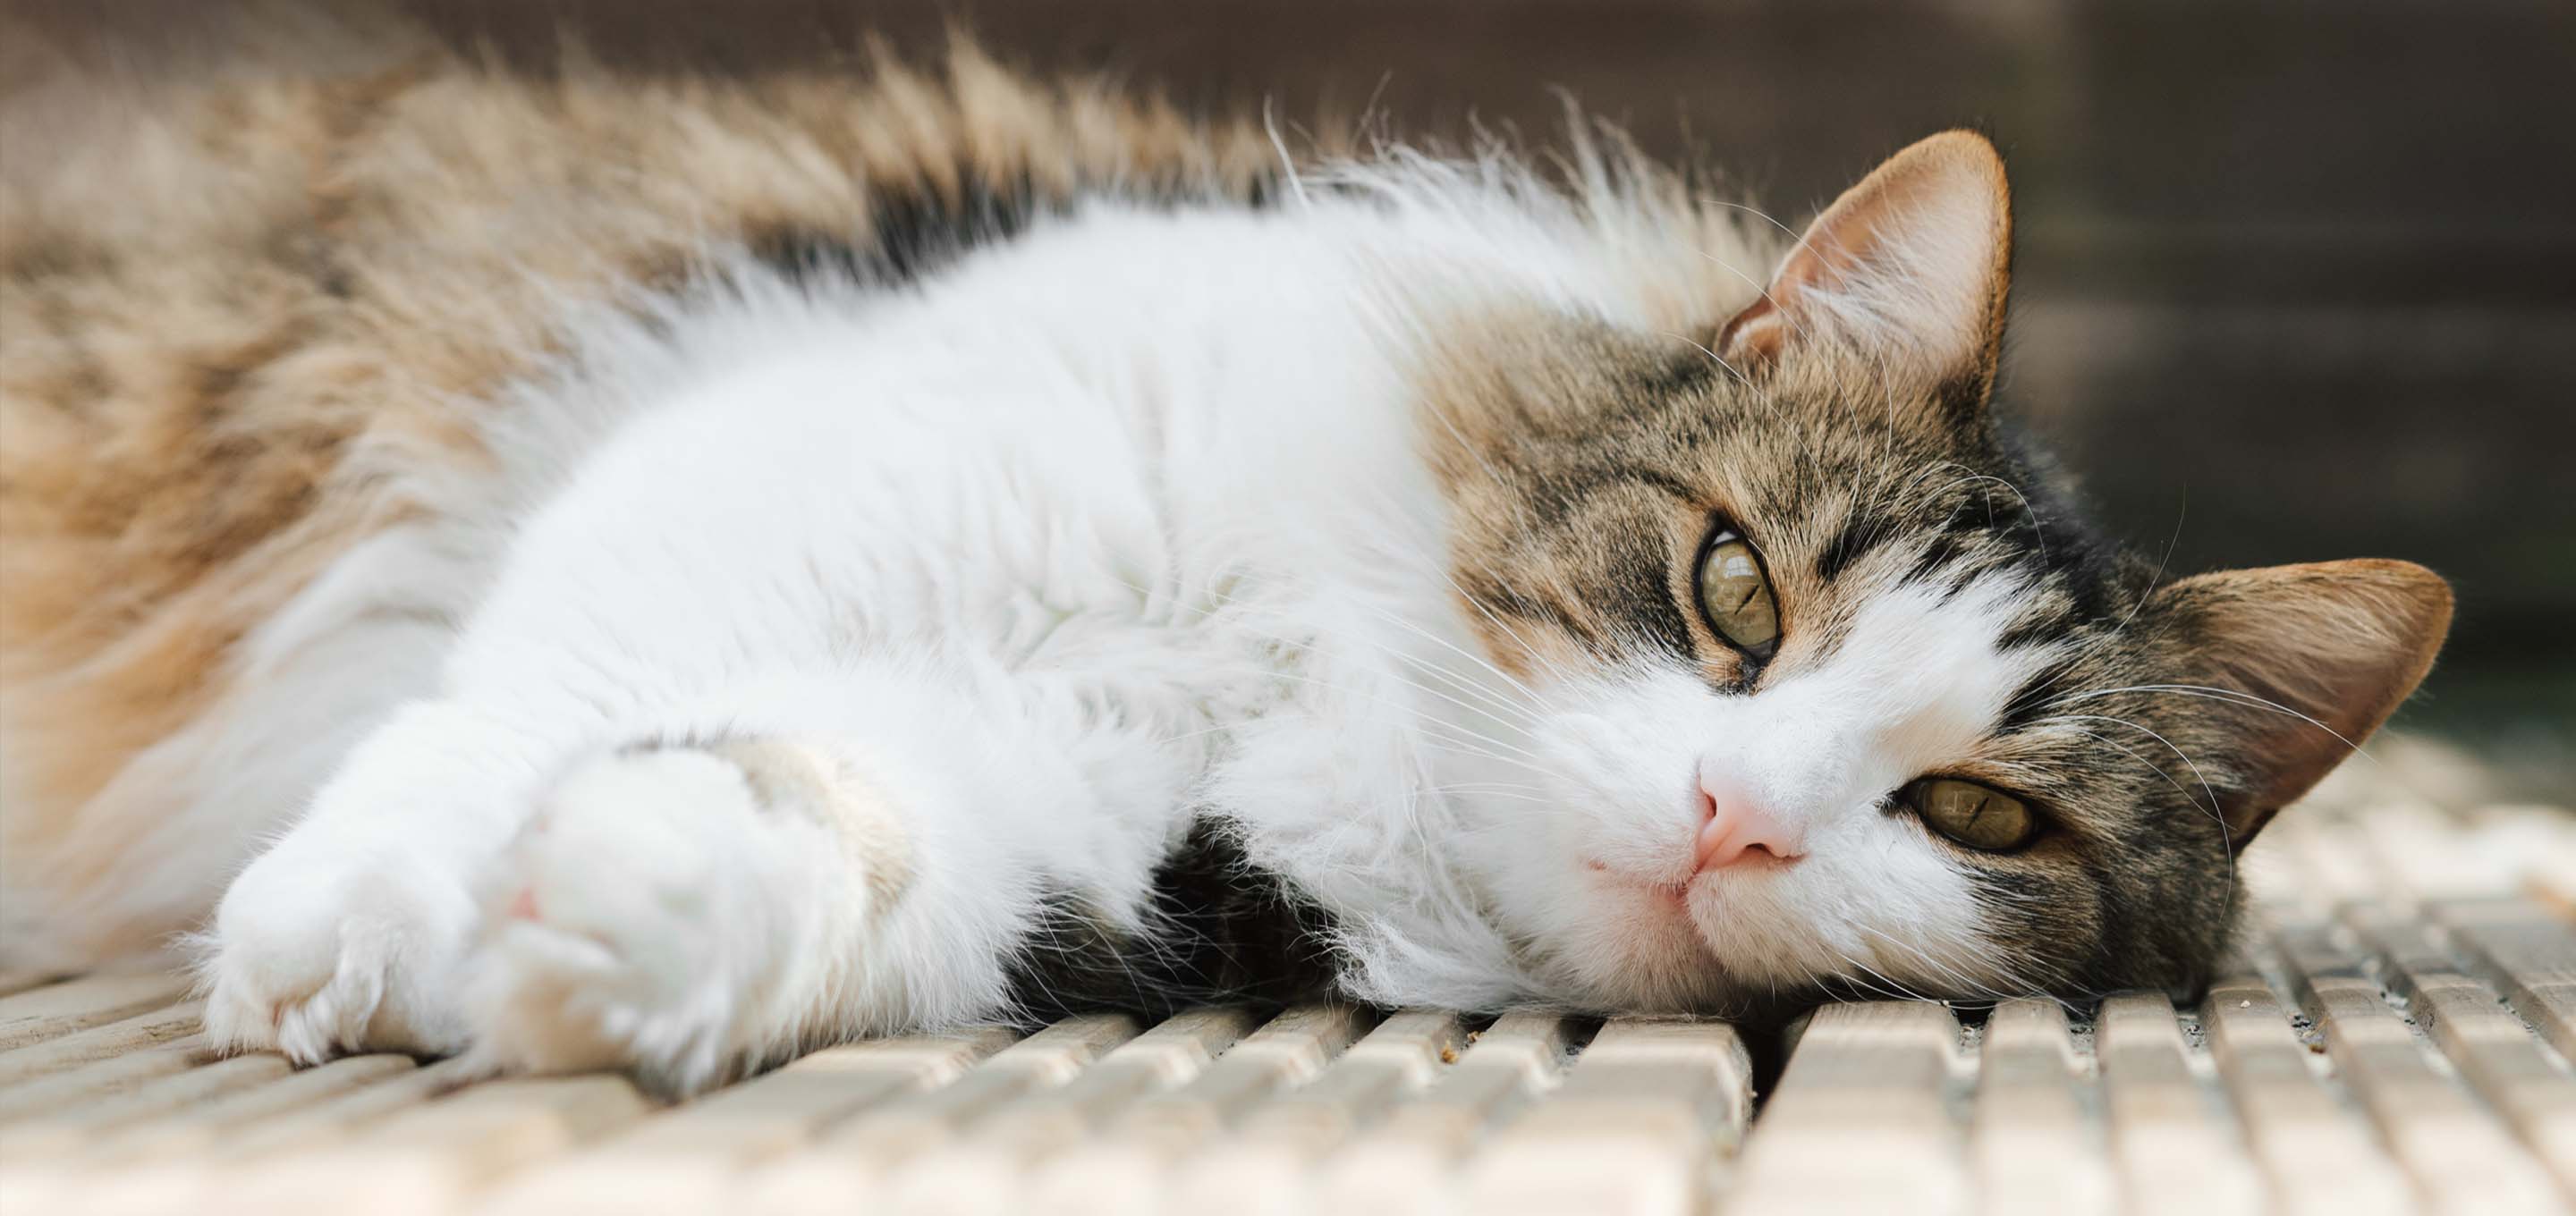 Cymric cat lying on floor image